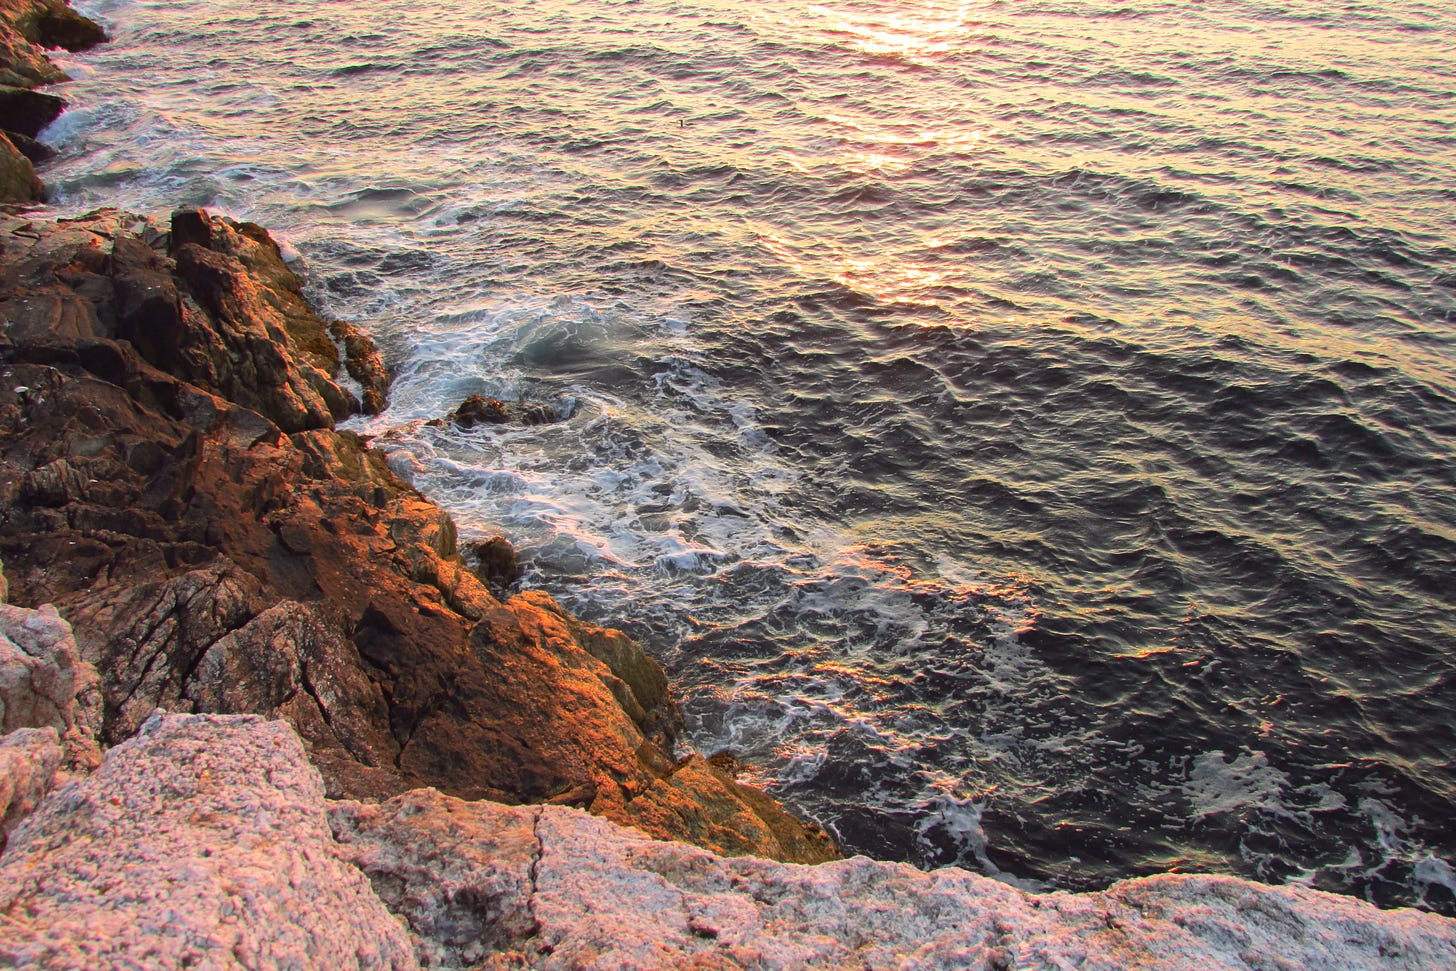 Ocean water and granite rocks lit by peachy warm morning light.